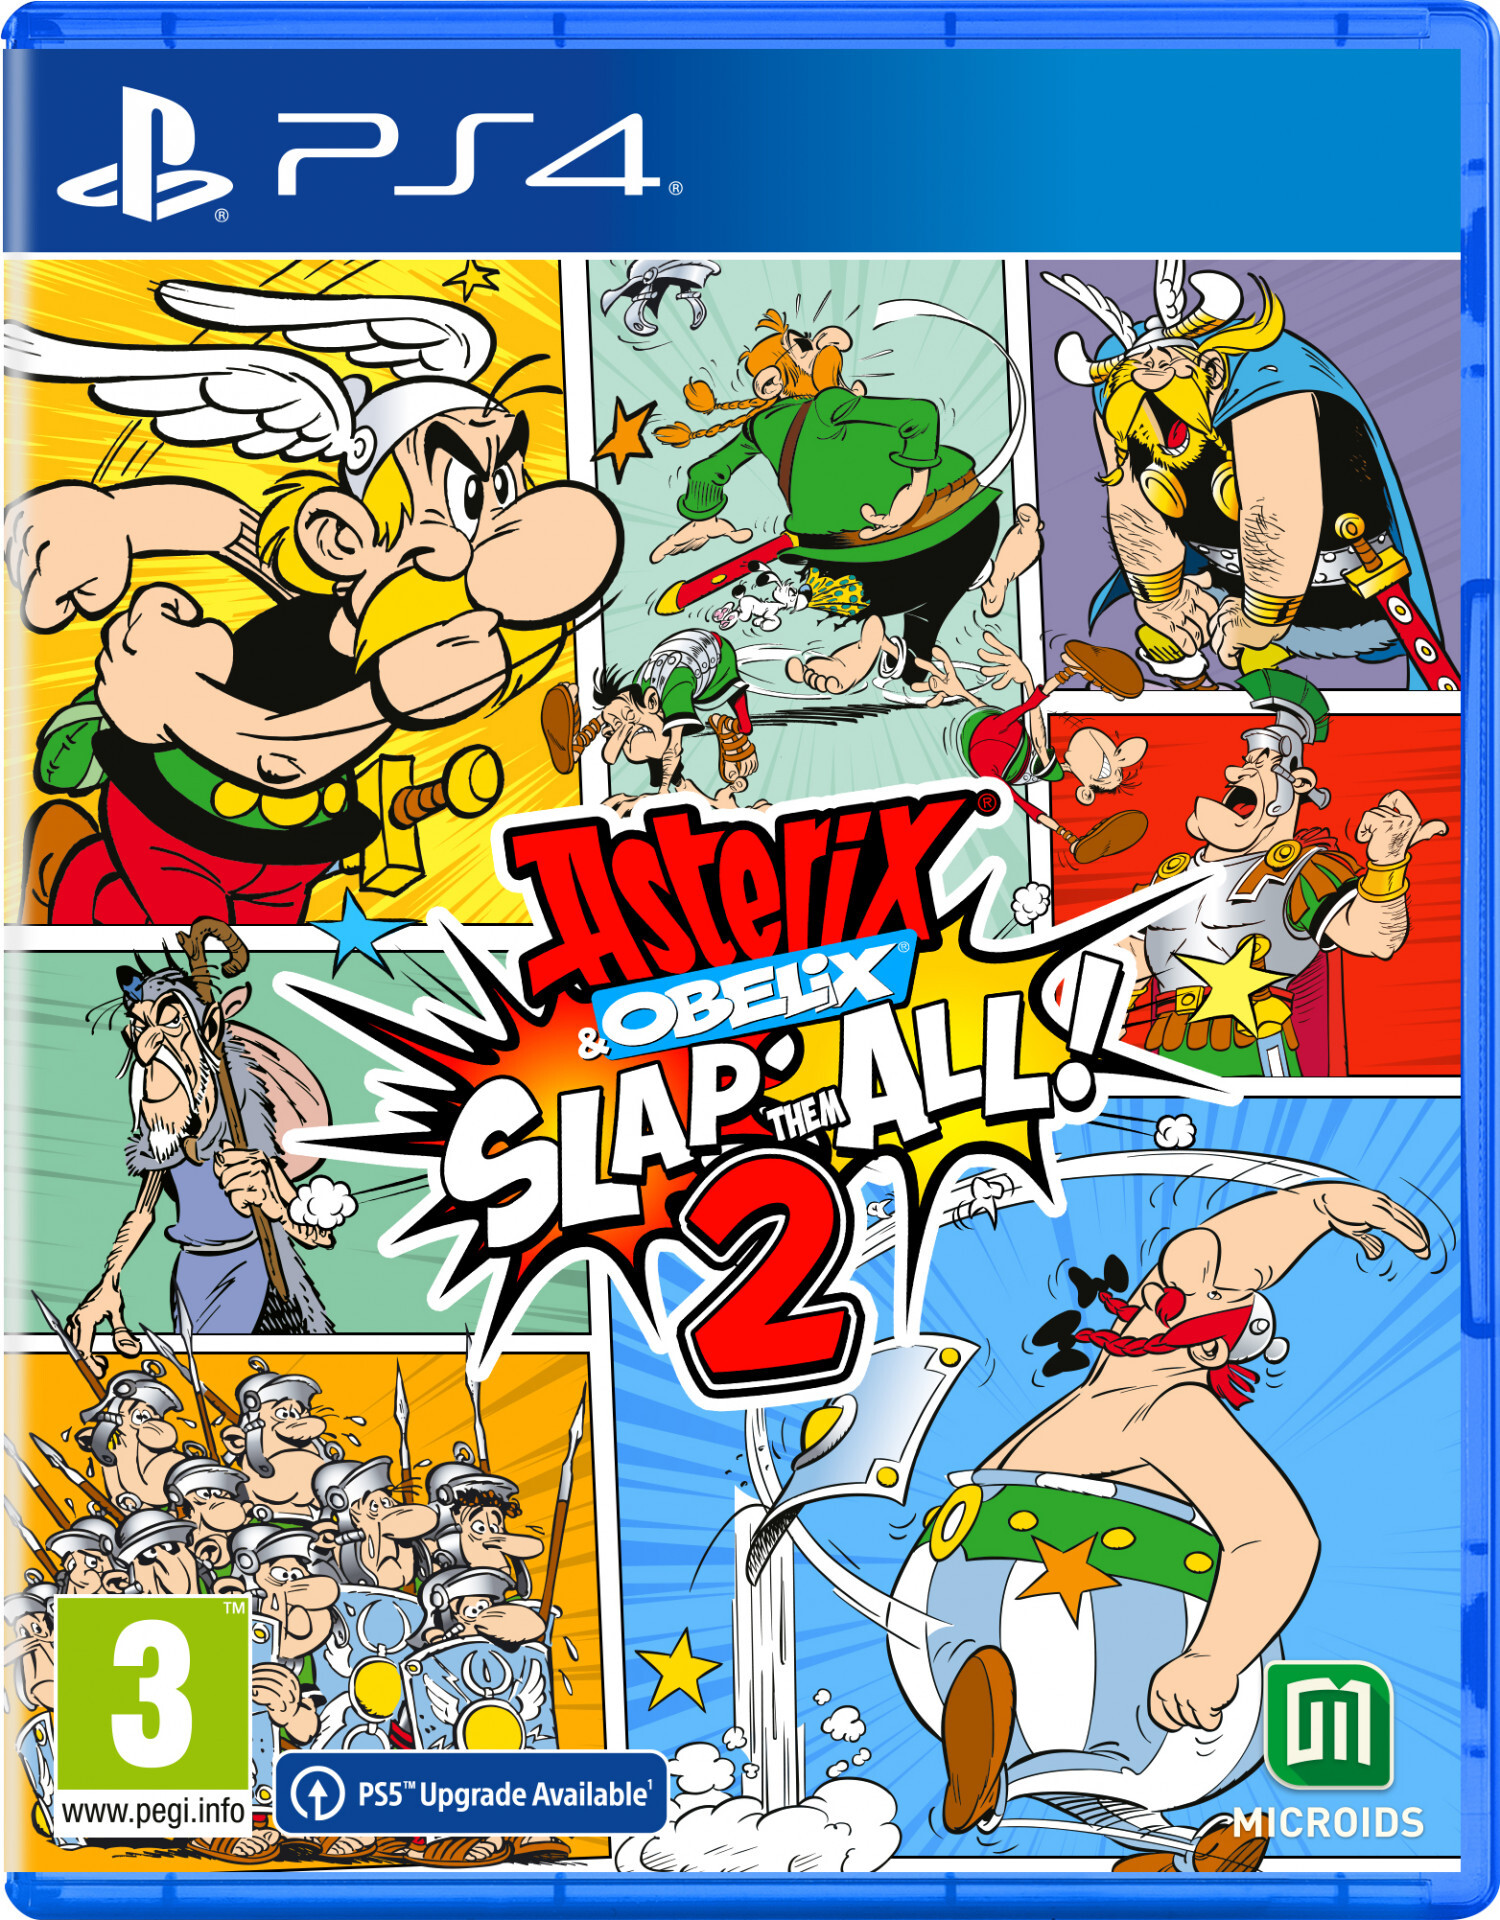 Mindscape asterix & obelix: slap them all! 2 PlayStation 4